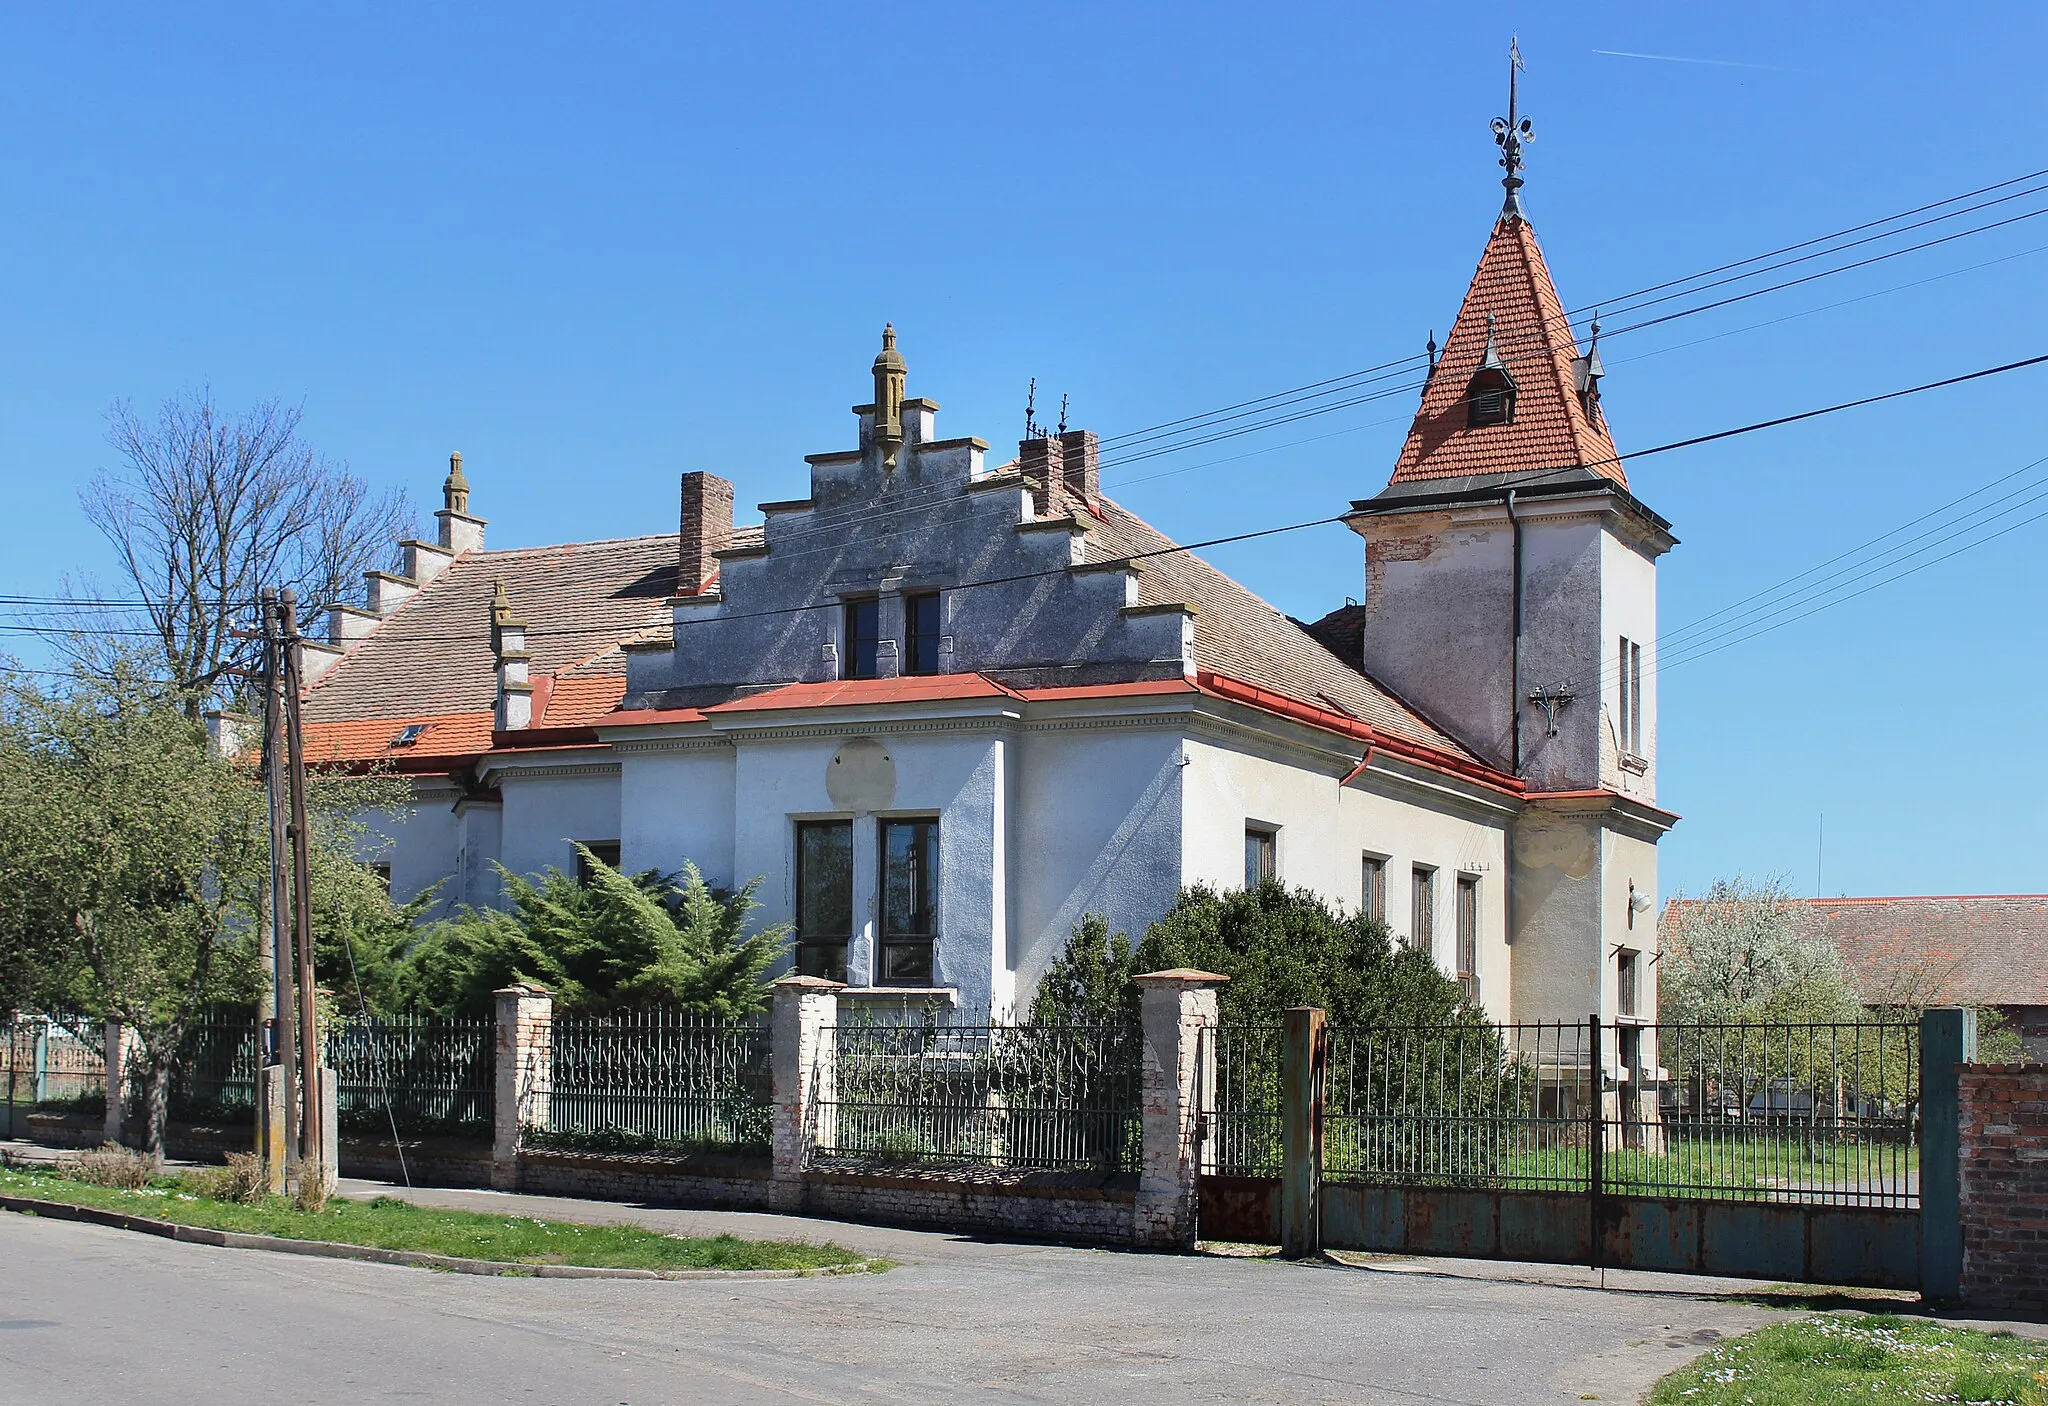 Photo showing: Farmer's house in Opolany, Czech Republic.